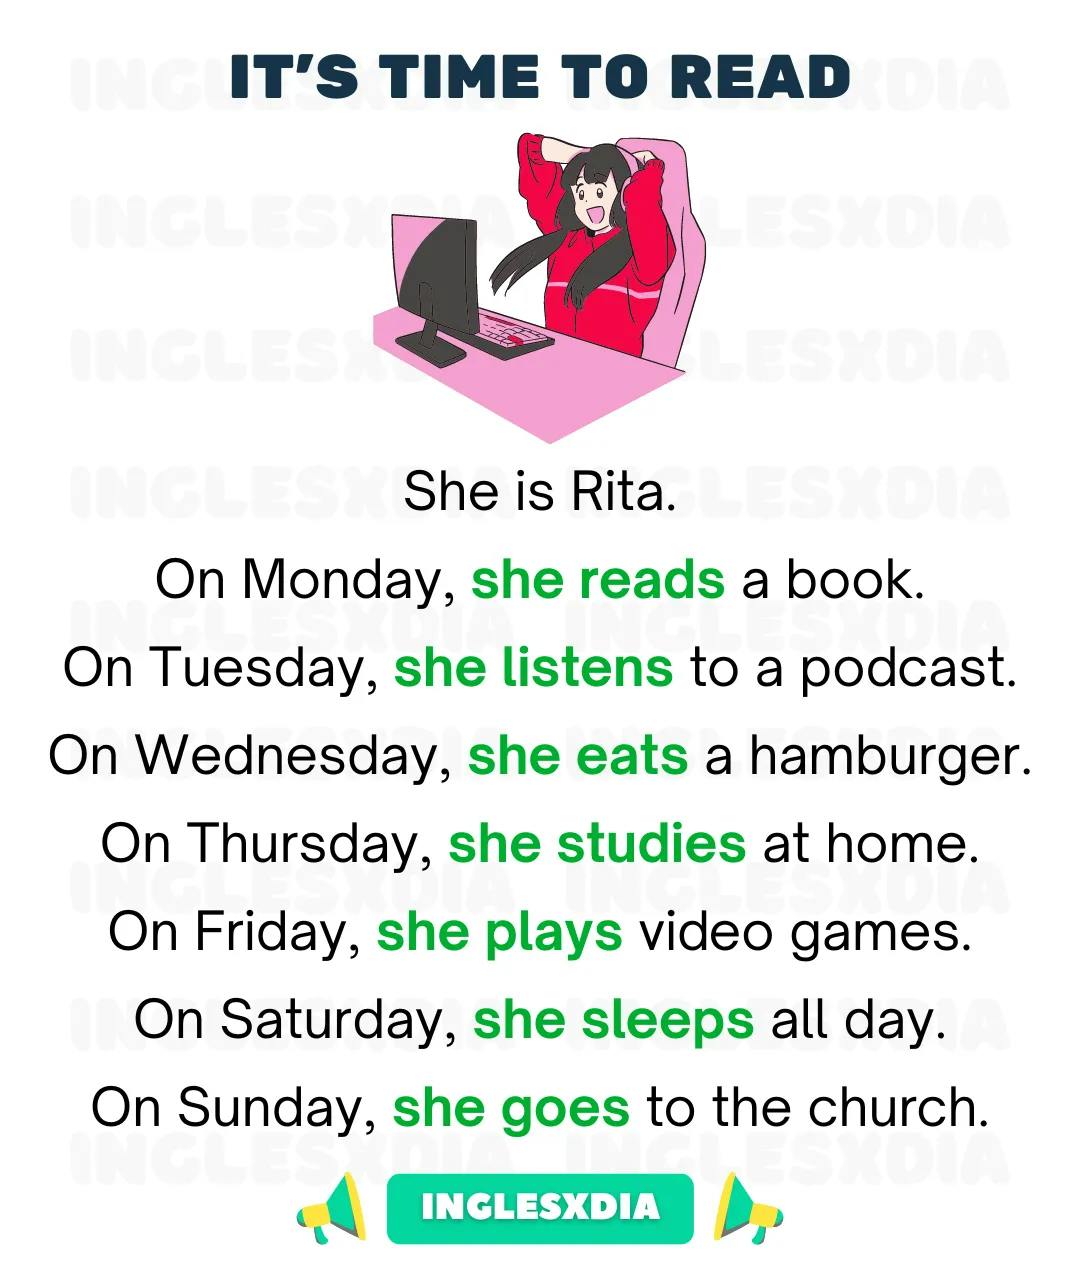 Rita's routine